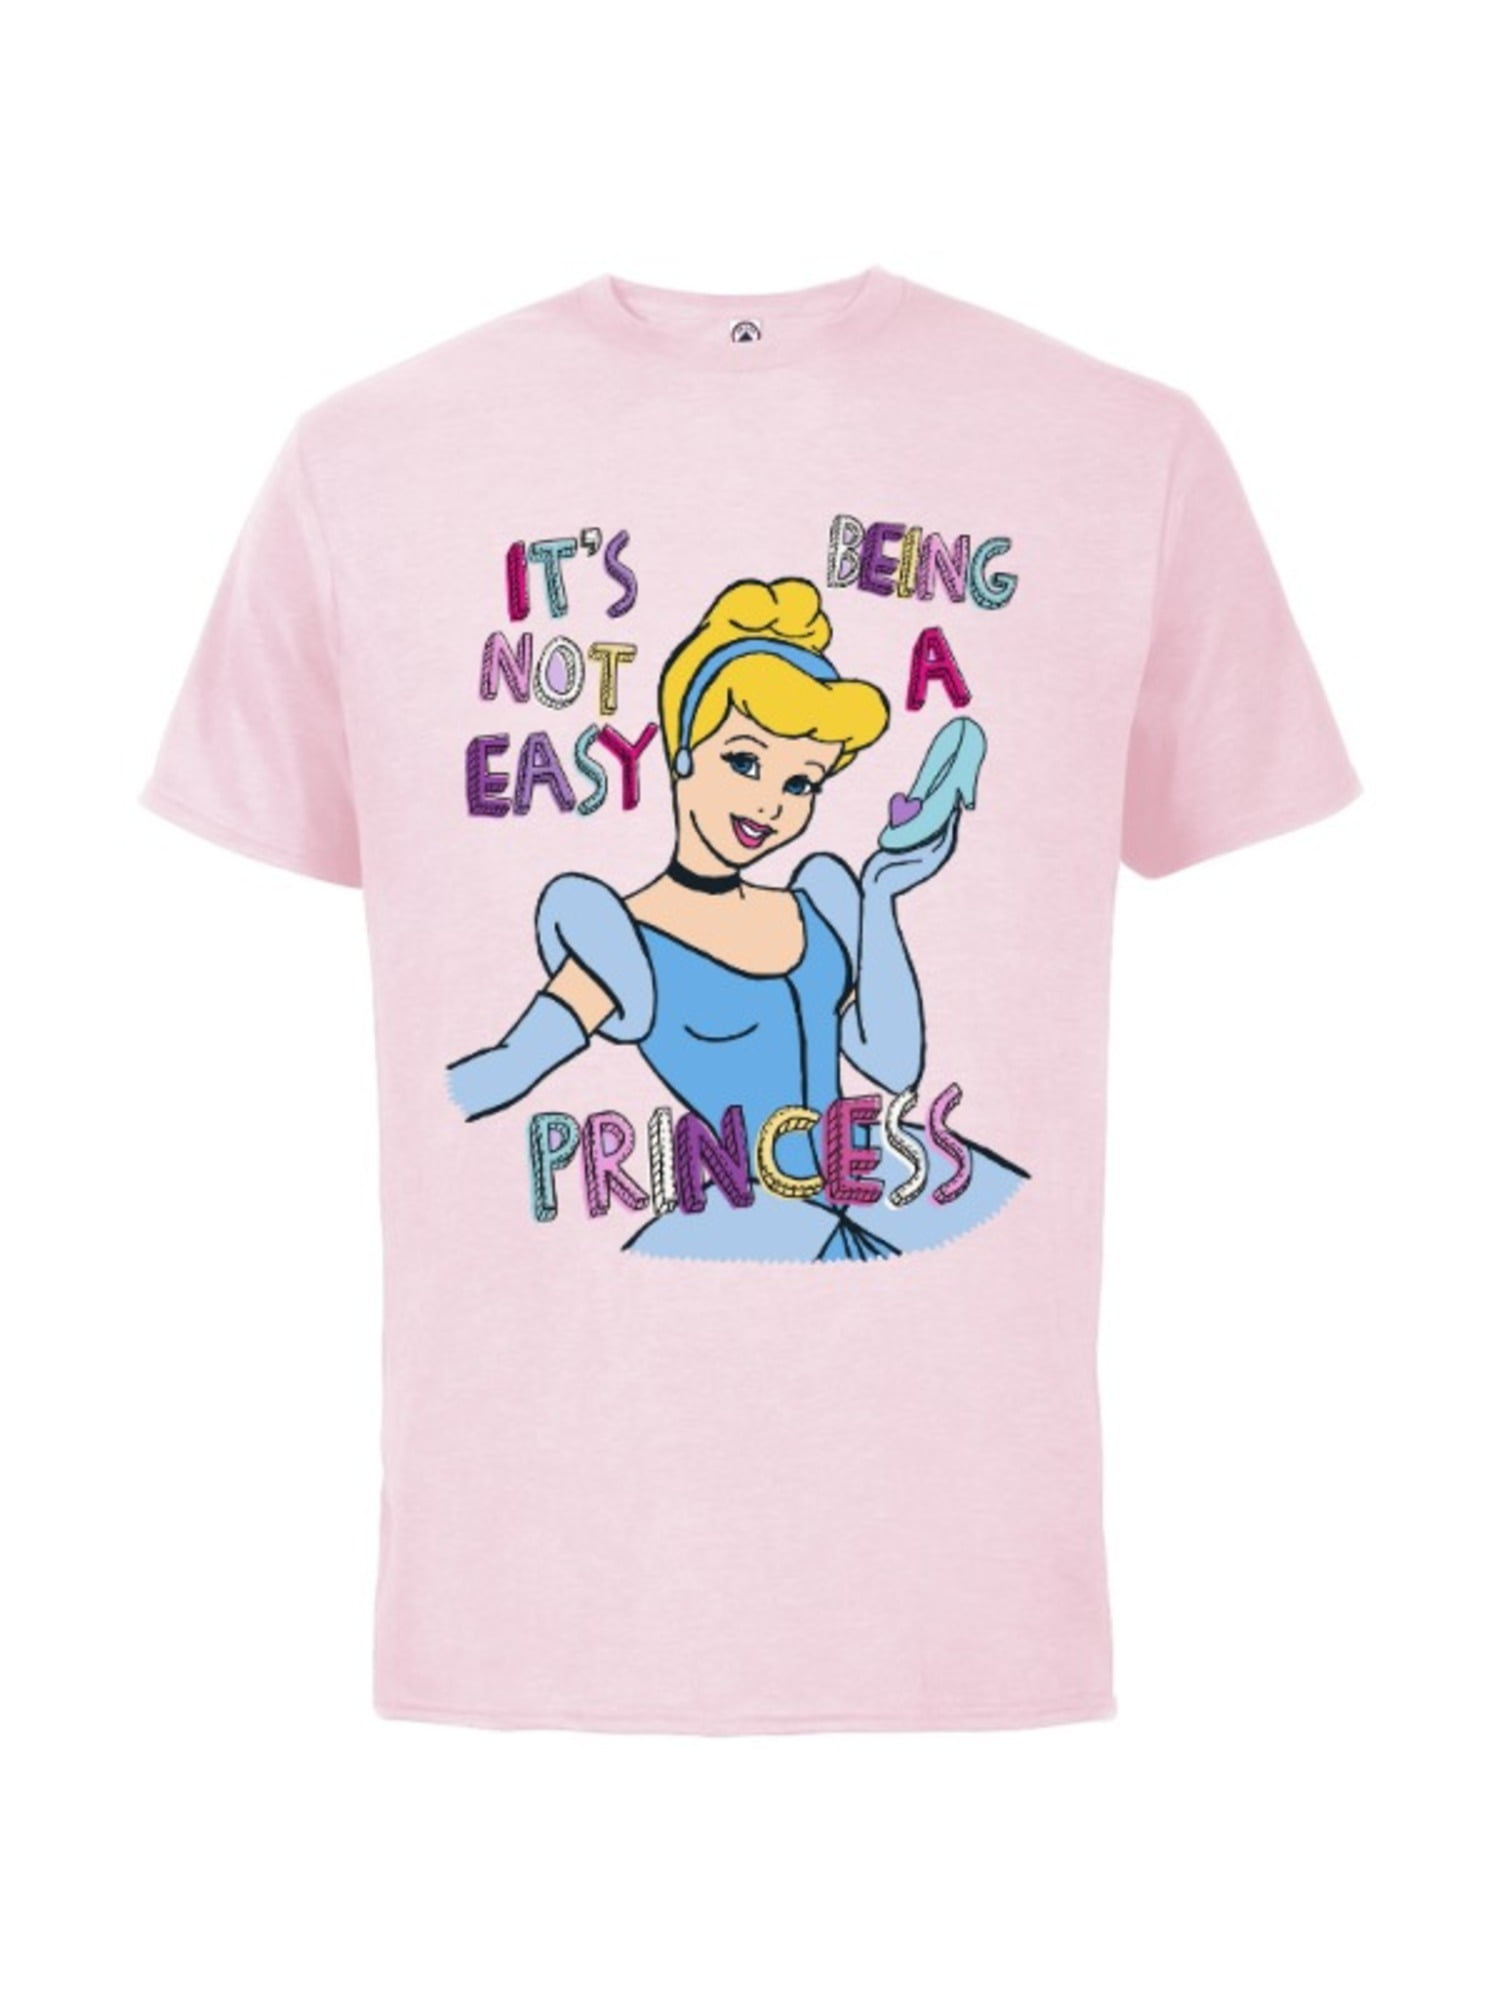 Disney Princess Shirt Magic Kingdom Day Disney Cute Shirt Disney Tees for kids and adults Disney Princesses Cute Princess Shirt